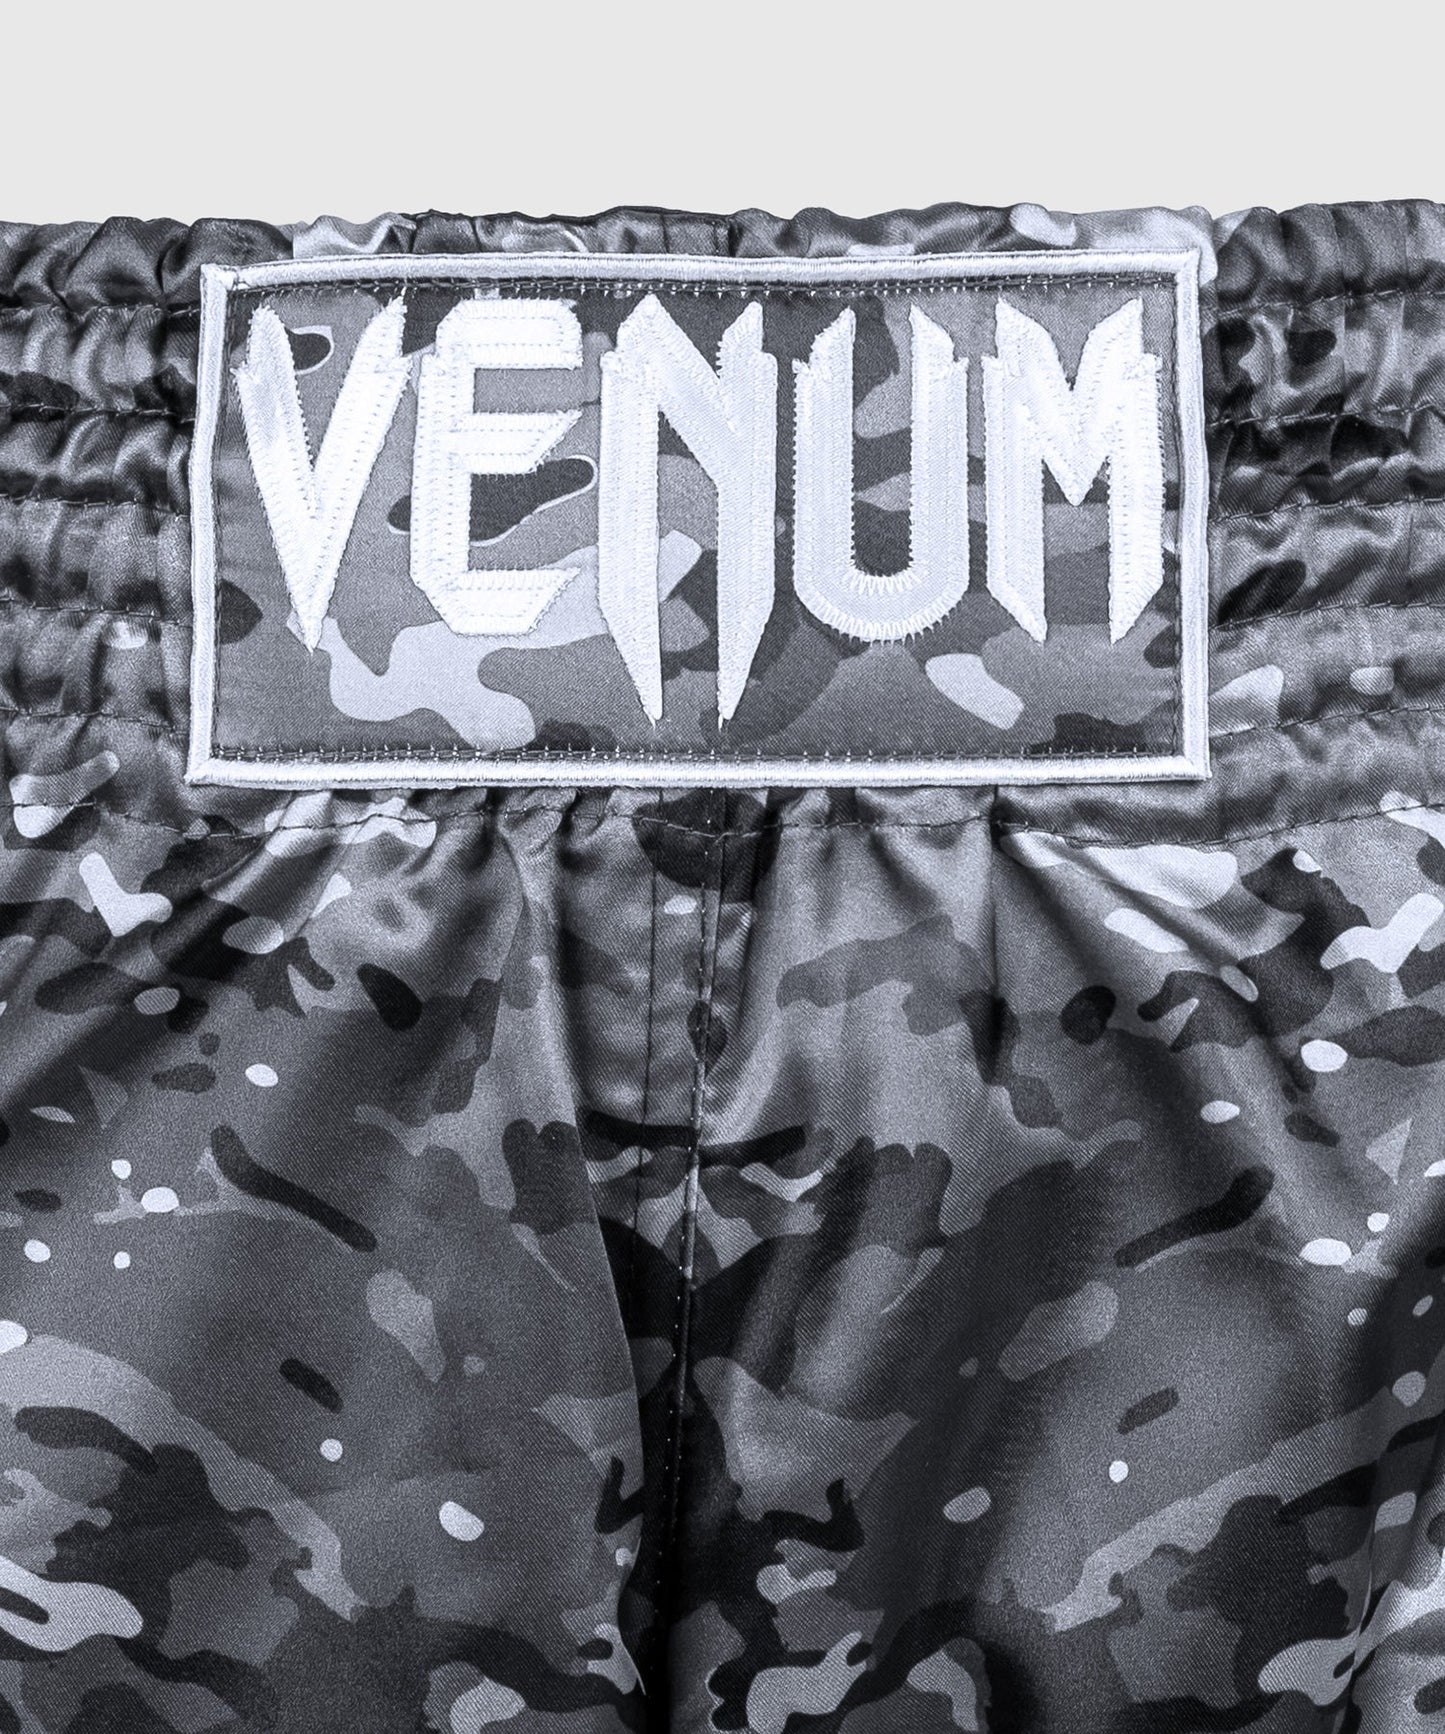 Venum Classic Pantalones cortos de Muay Thai - Urban Camo